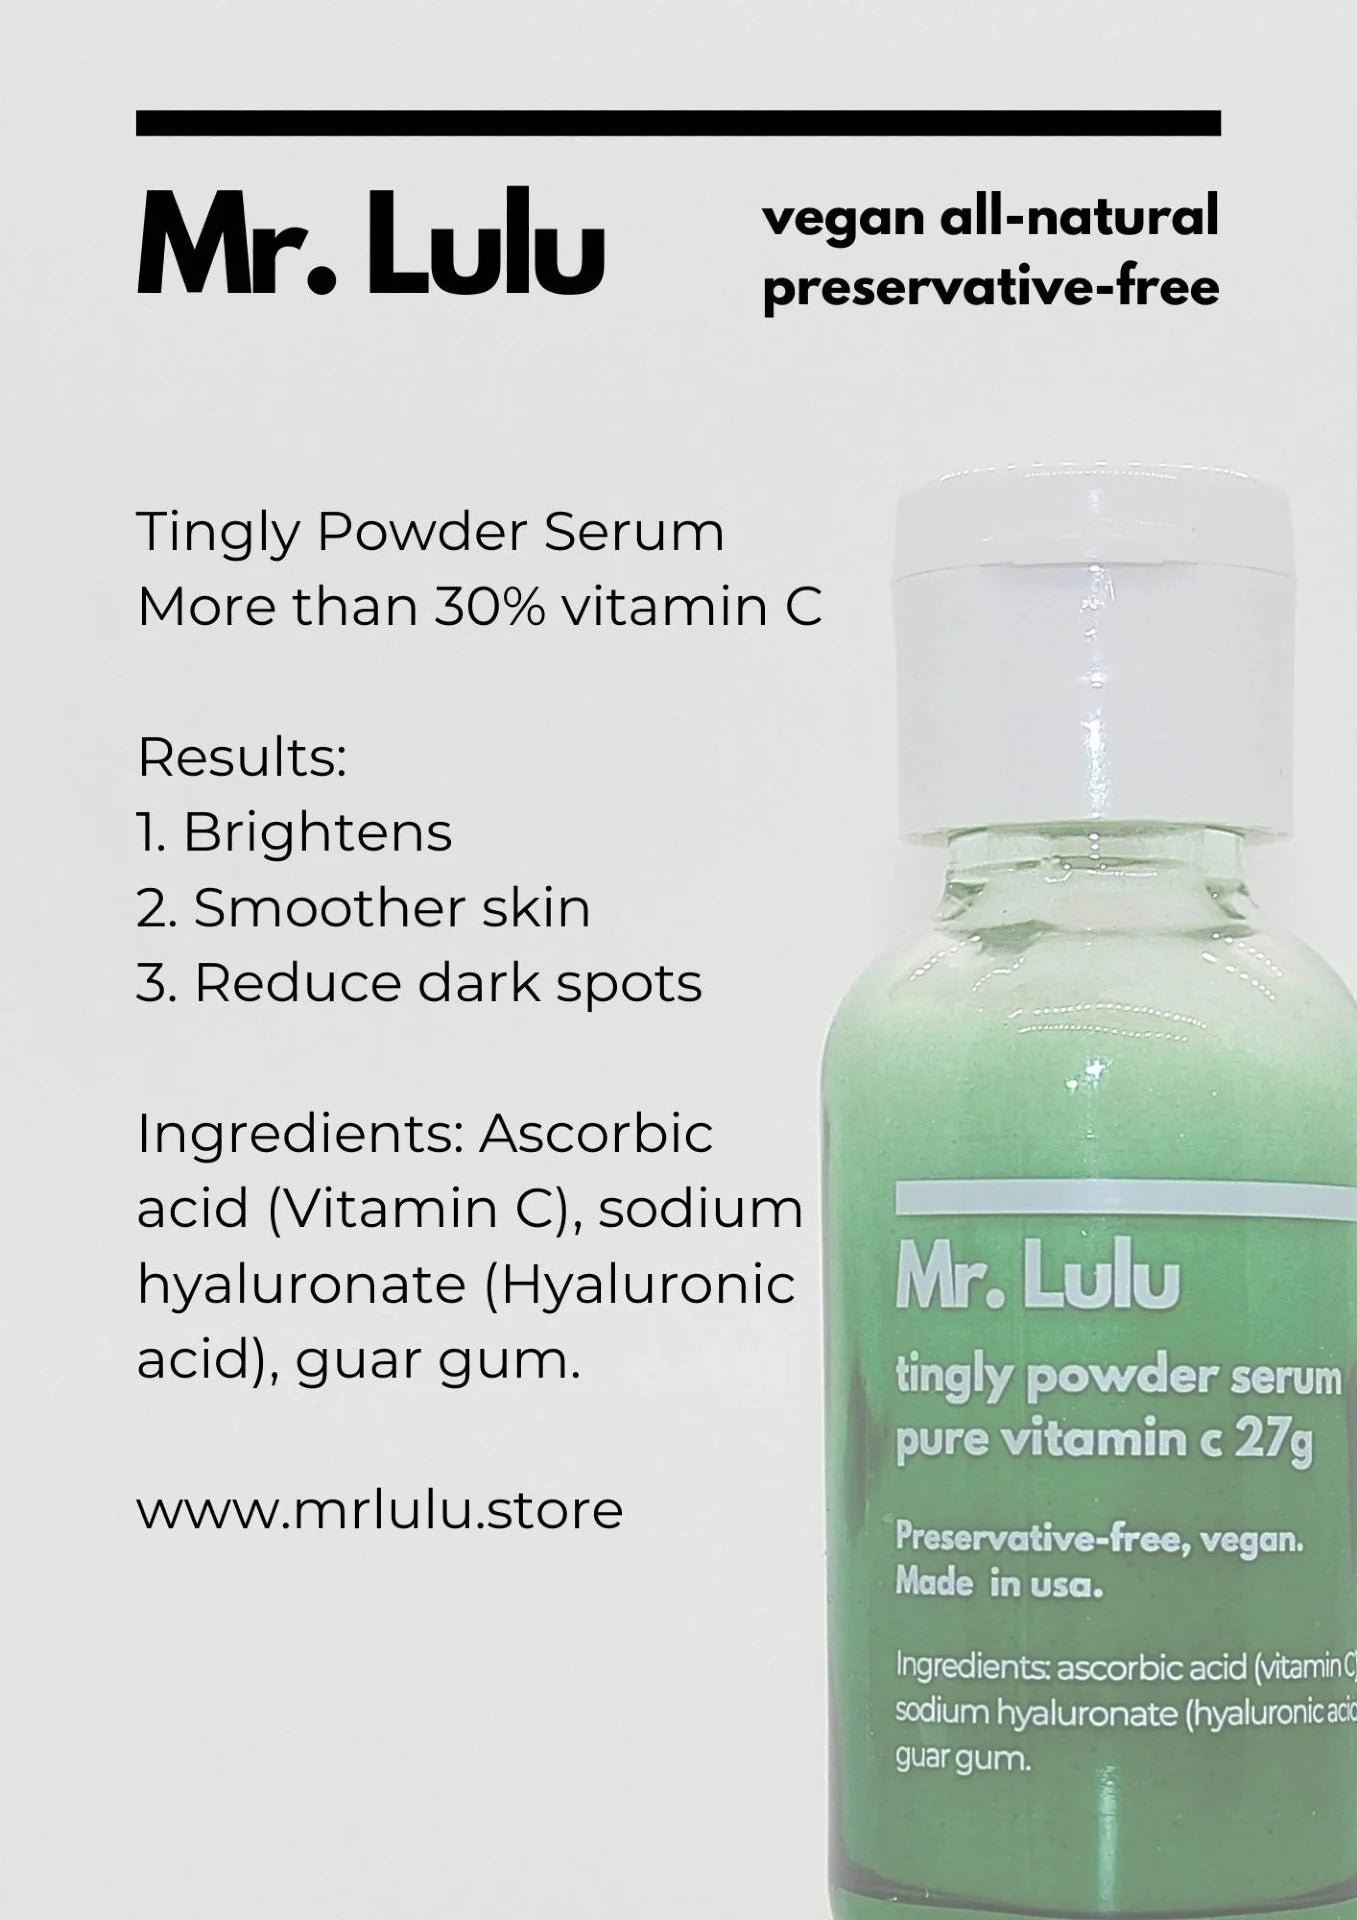 Mr. LuLu Vitamin C Powder Serum